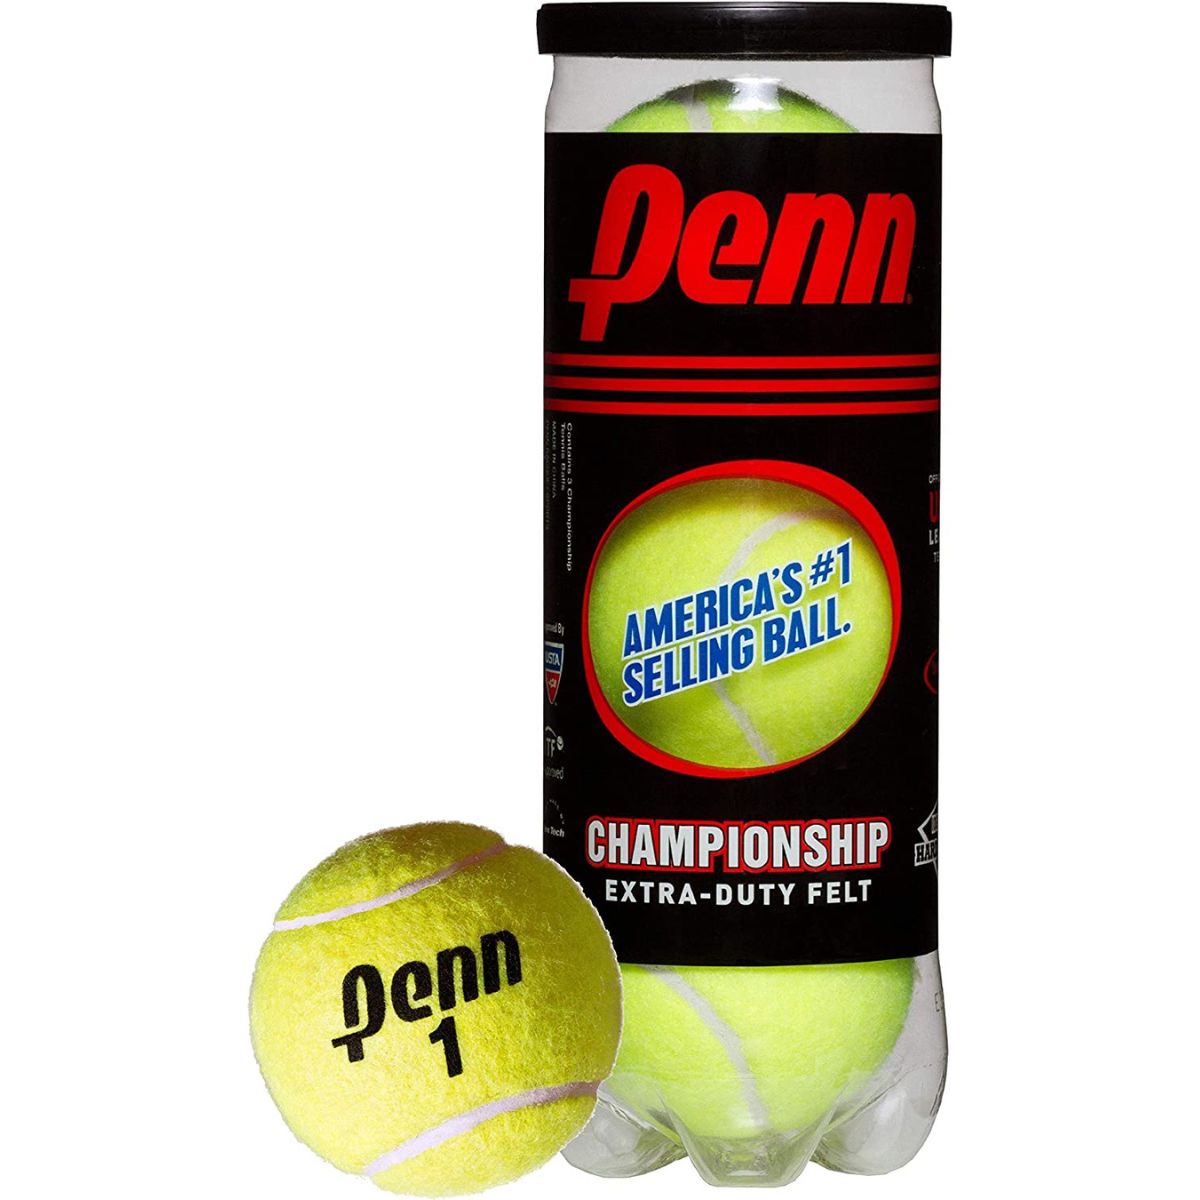 The Best Tennis Balls for Practice Options: Penn Championship Tennis Balls